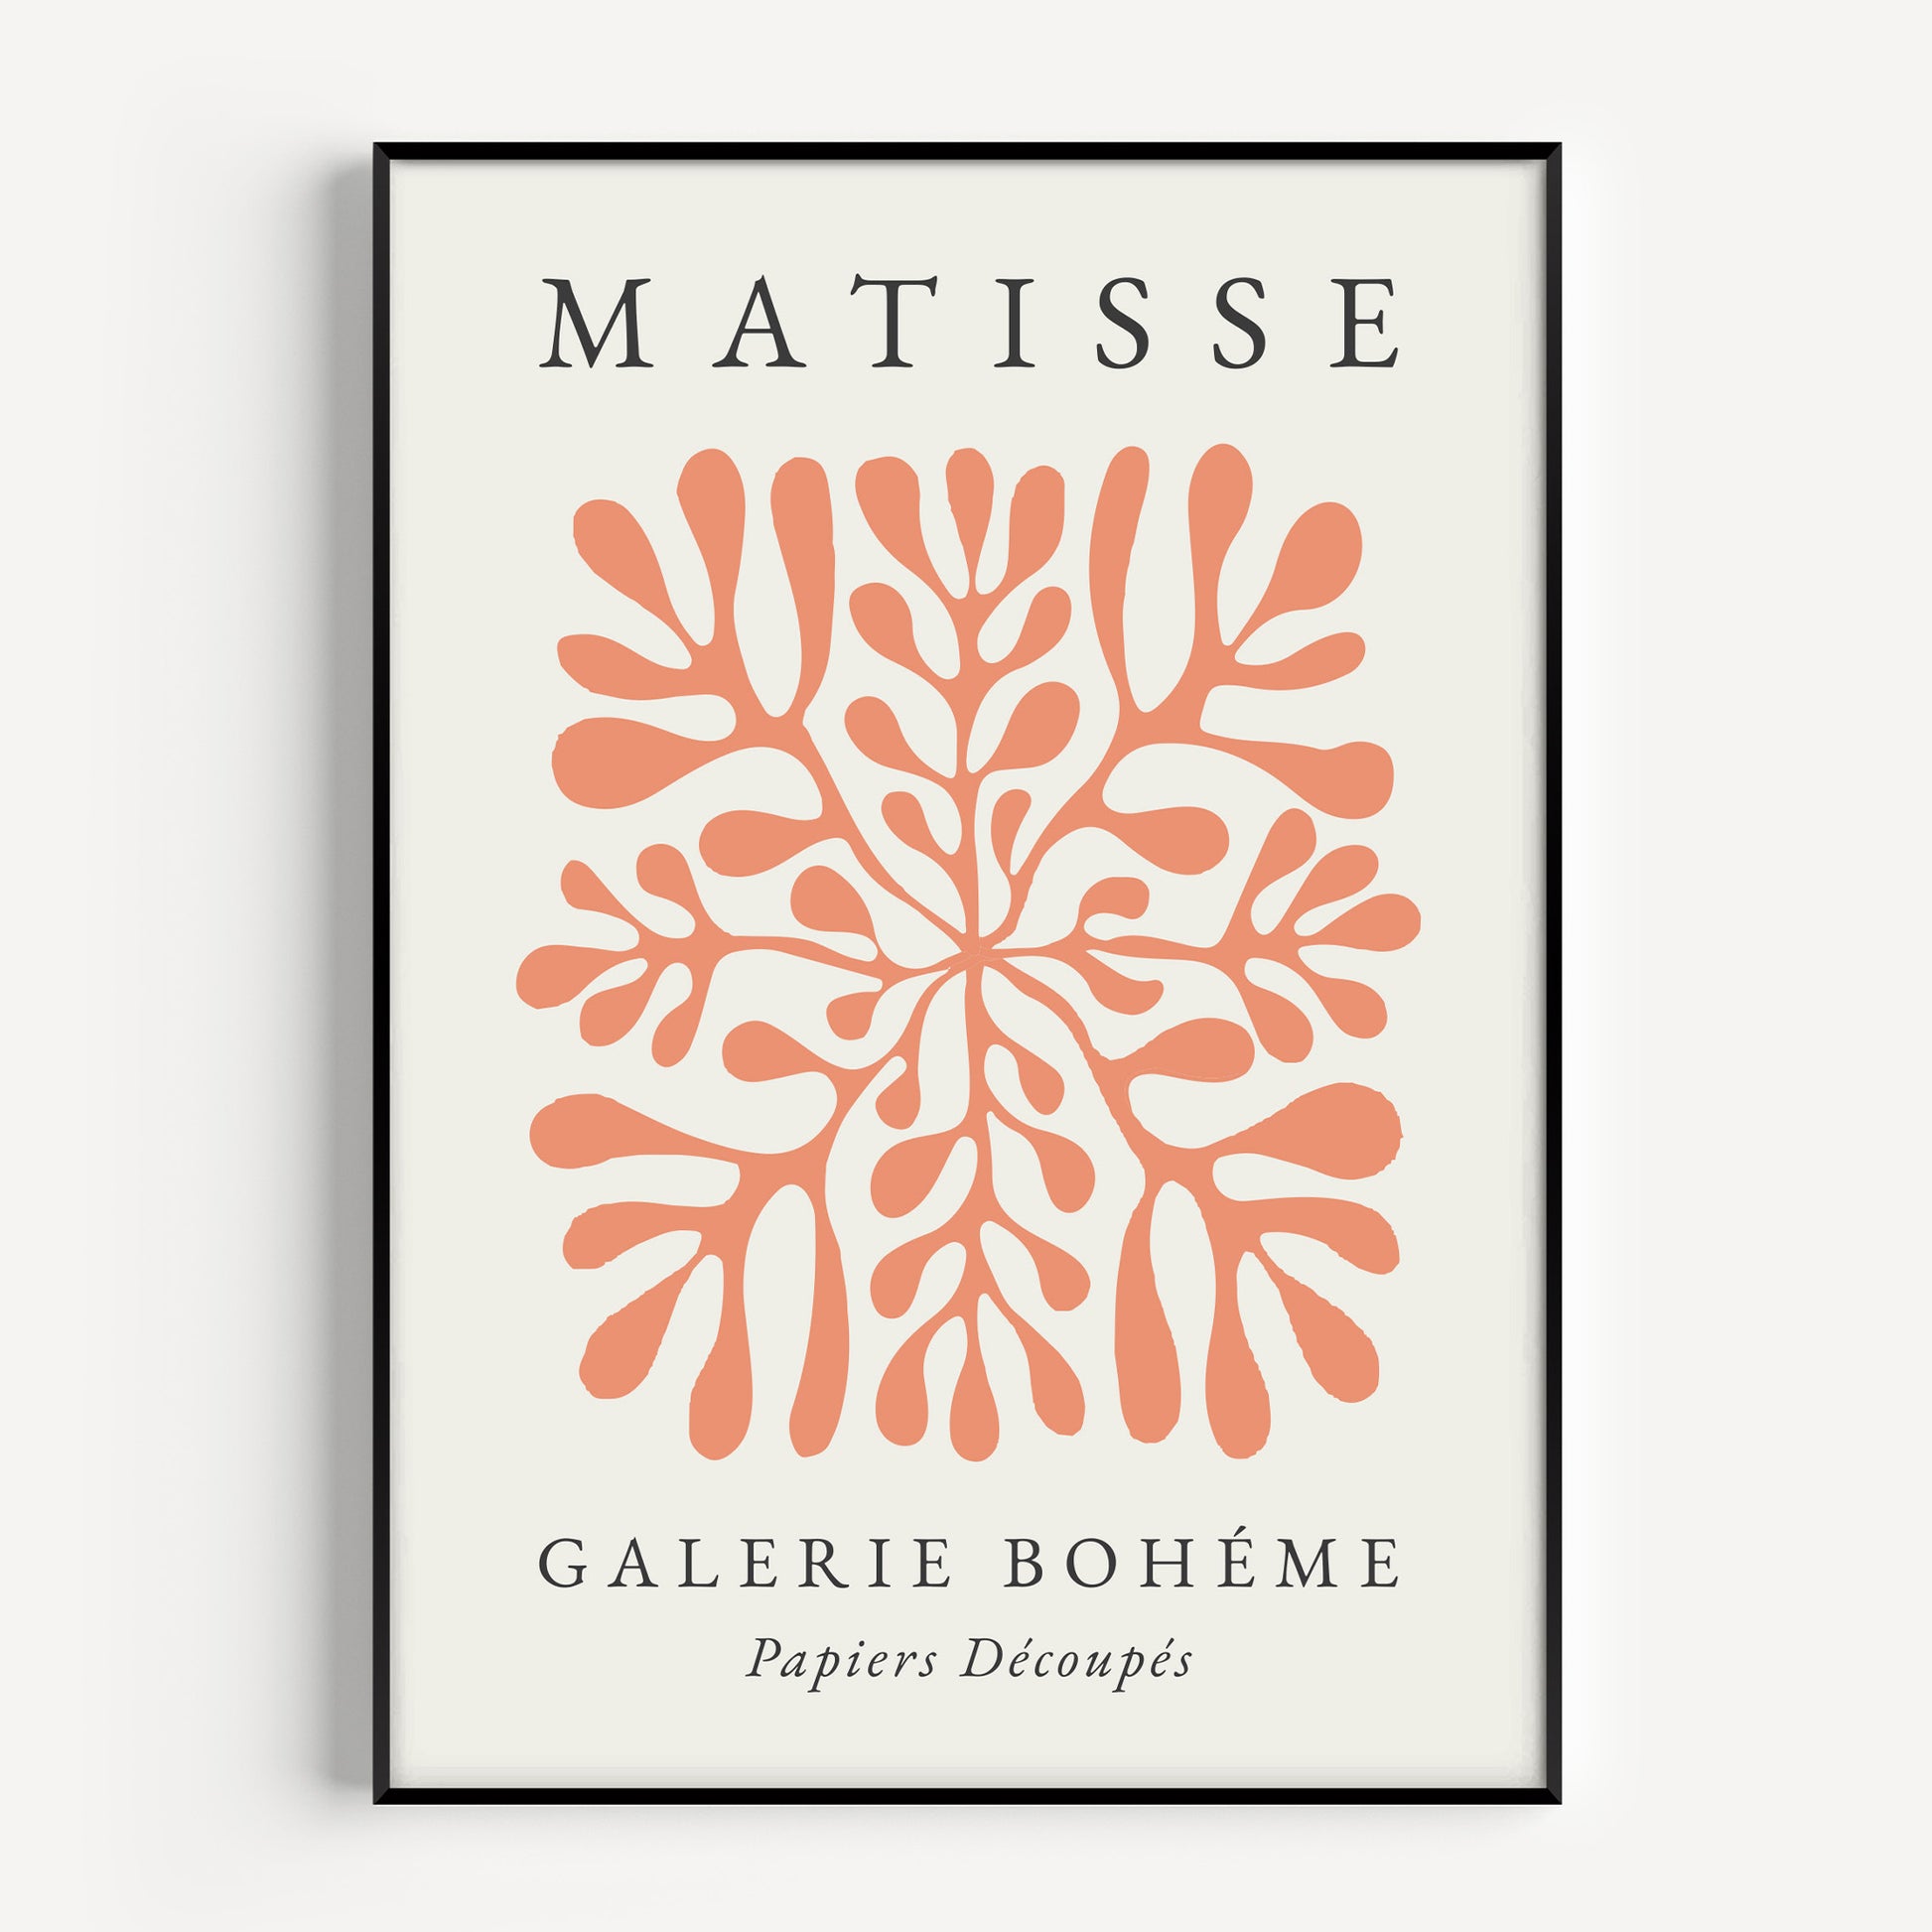 Matisse leaf print in orange